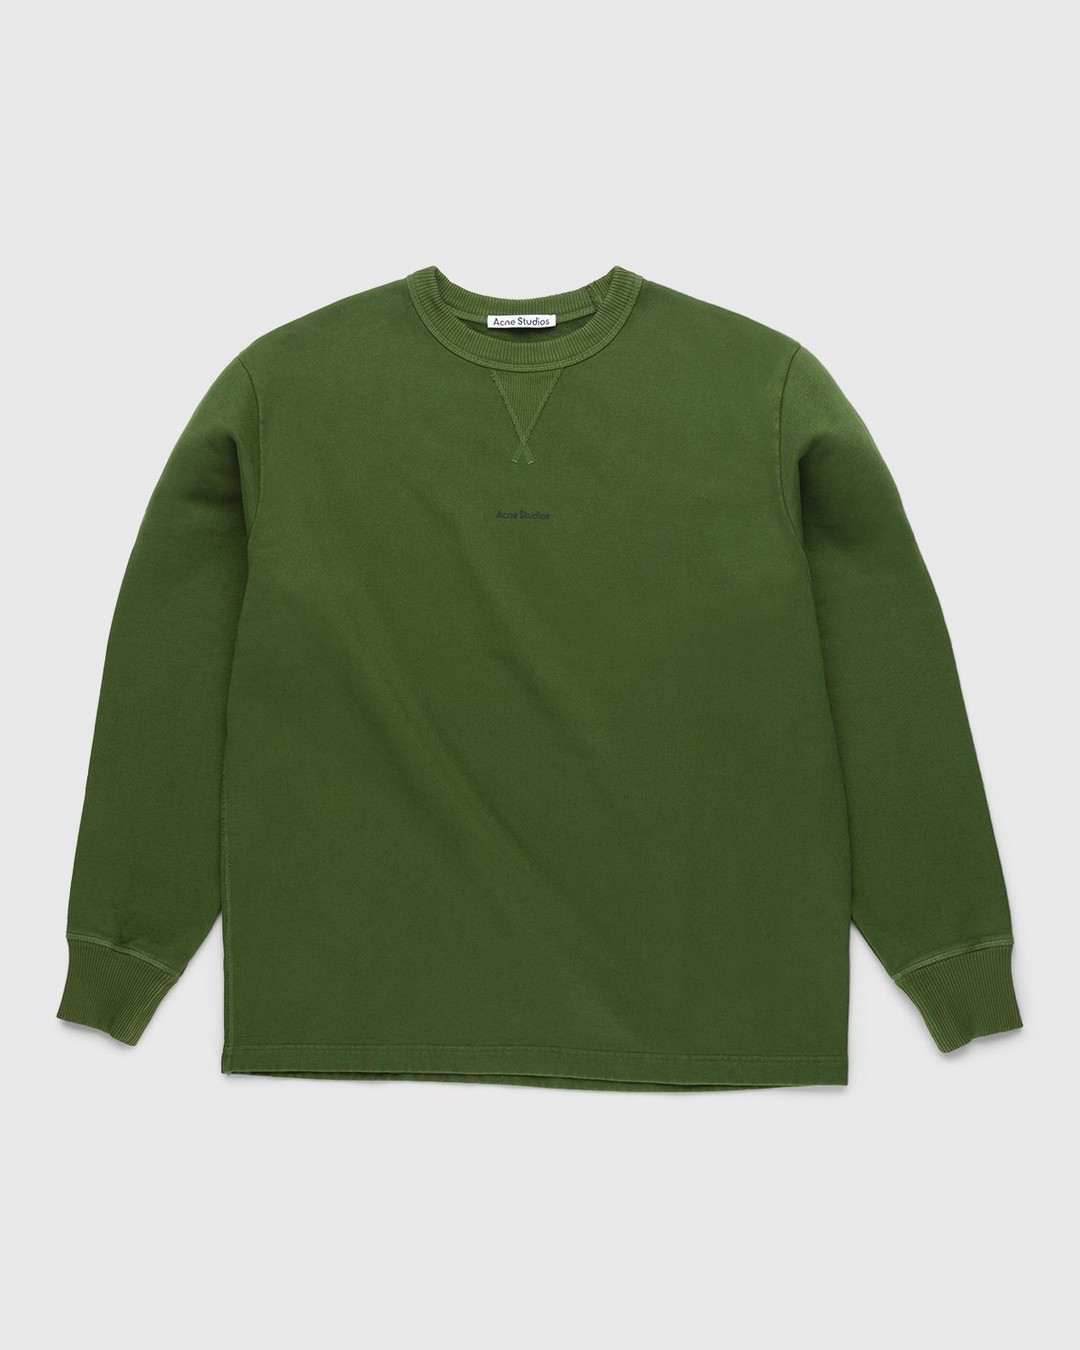 Acne Studios – Organic Cotton Crewneck Sweatshirt Bottle Green - Sweatshirts - Green - Image 1